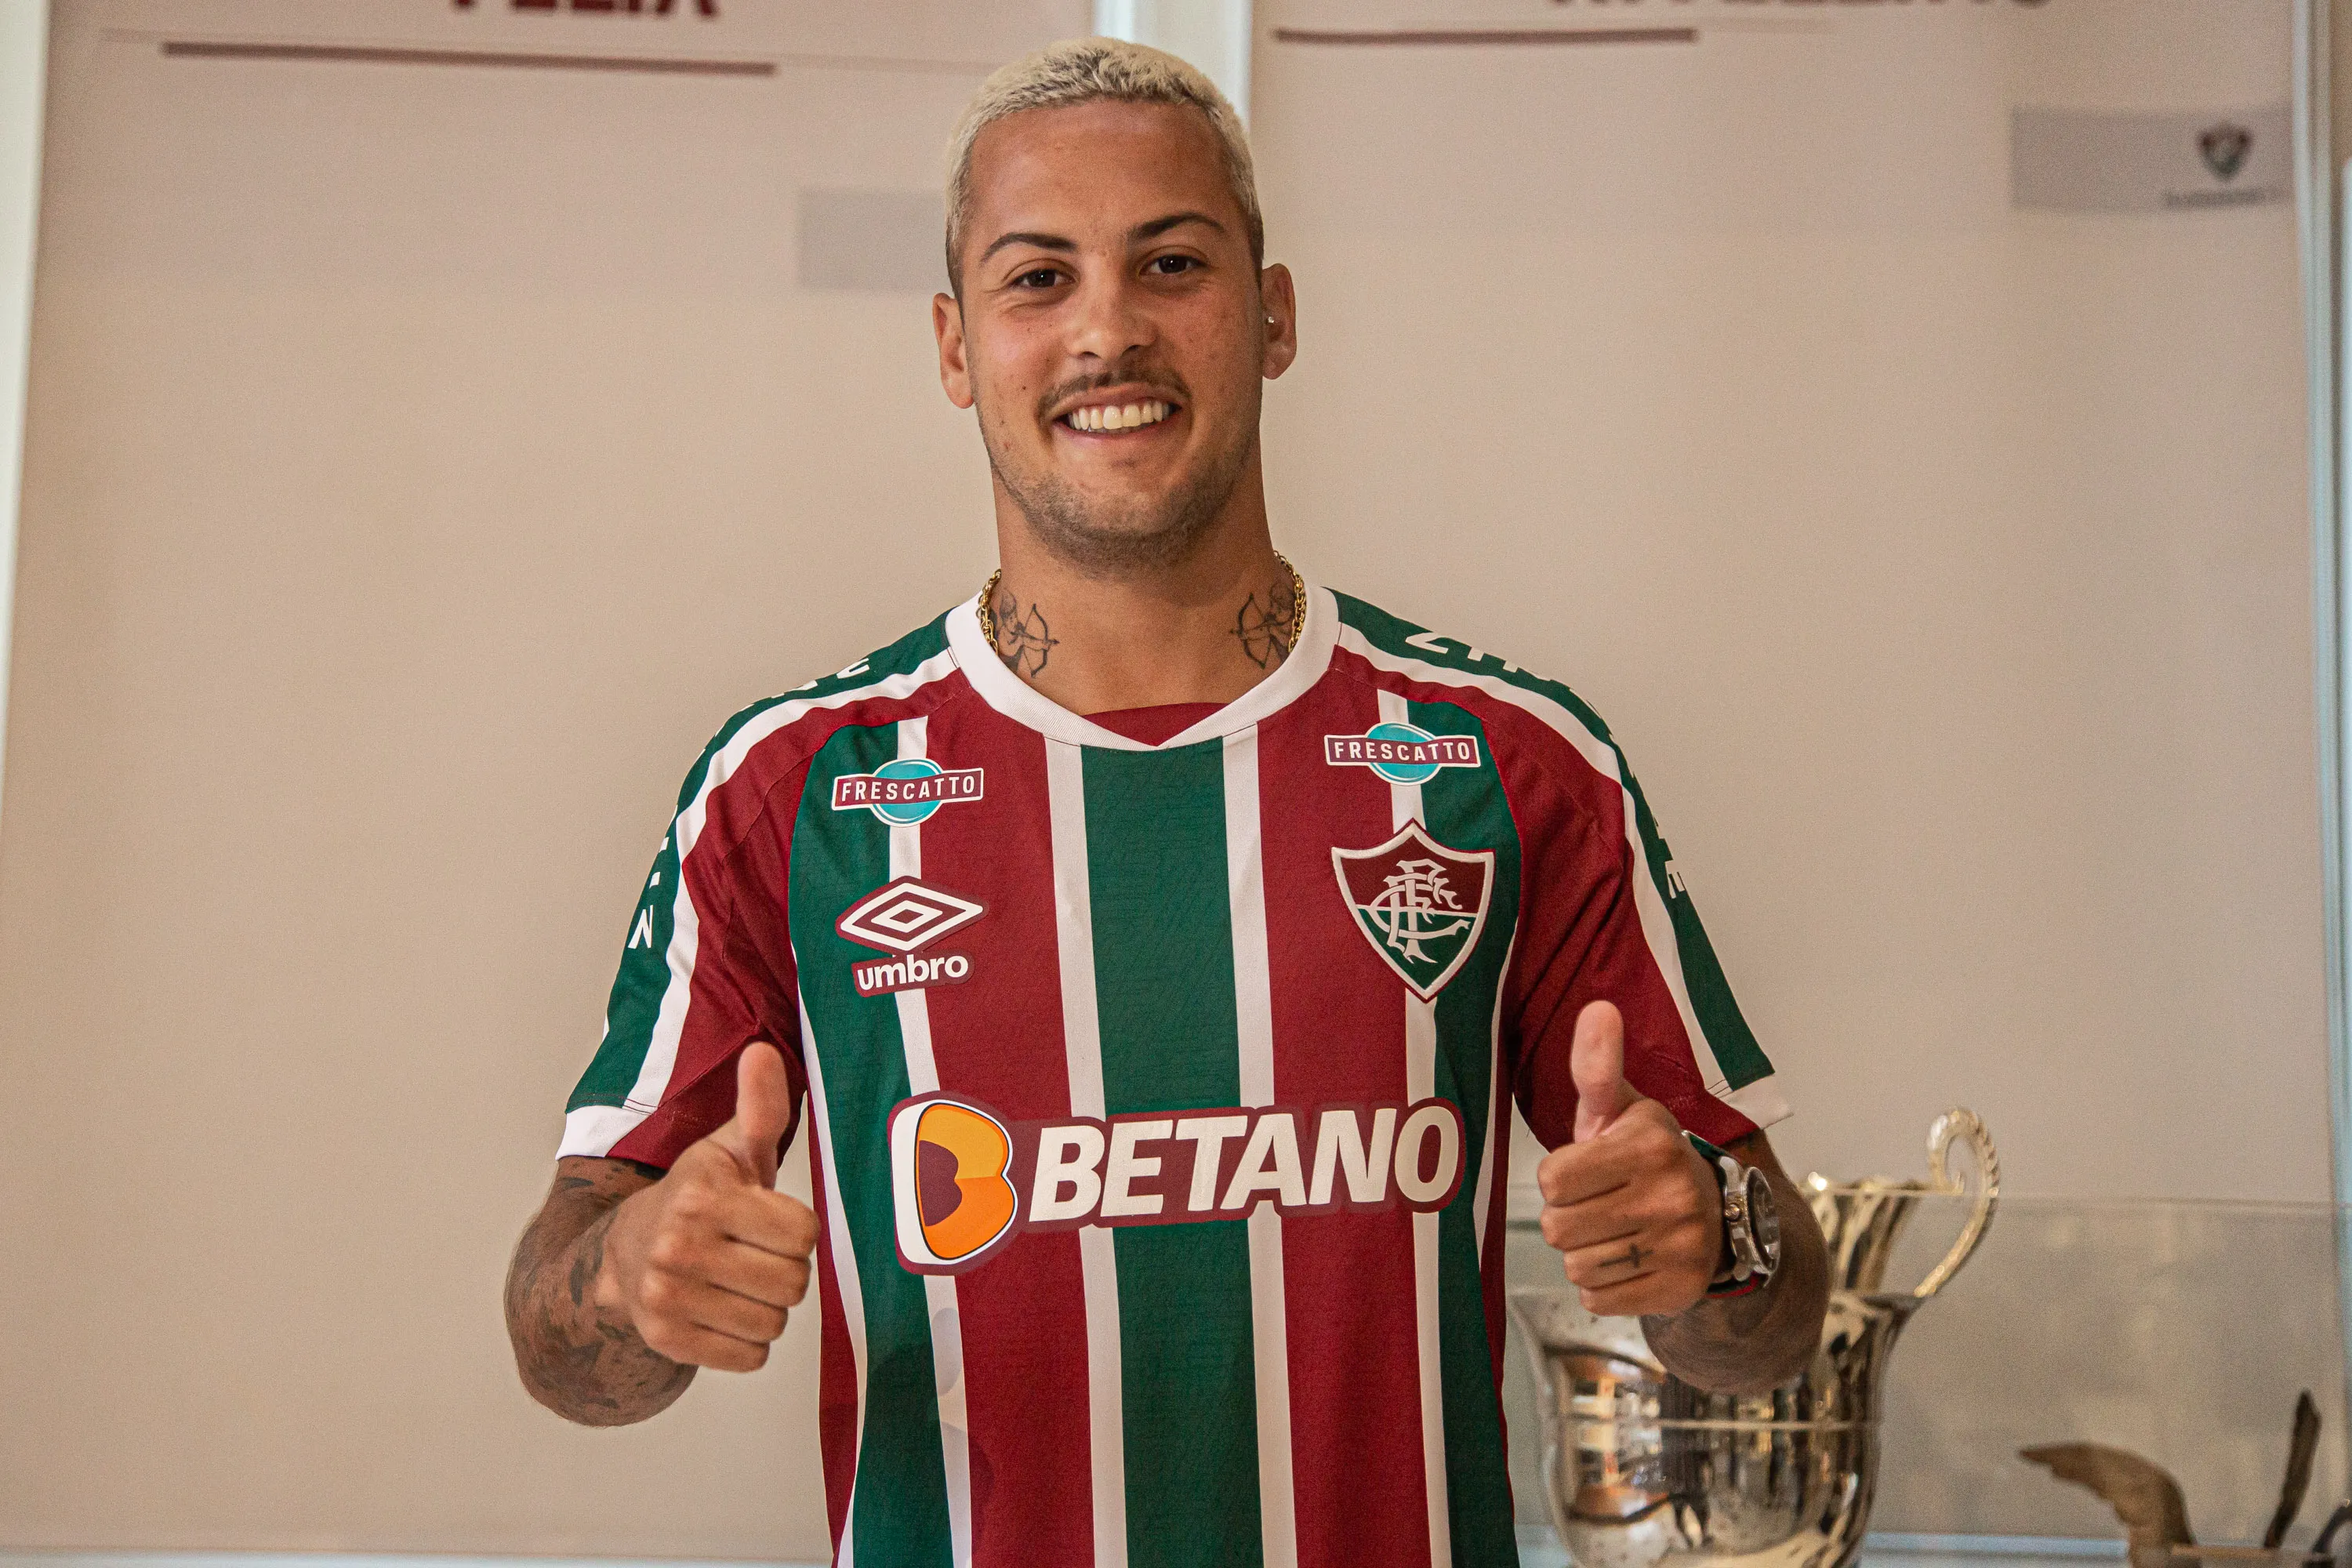 Guga posa com a camisa do Fluminense